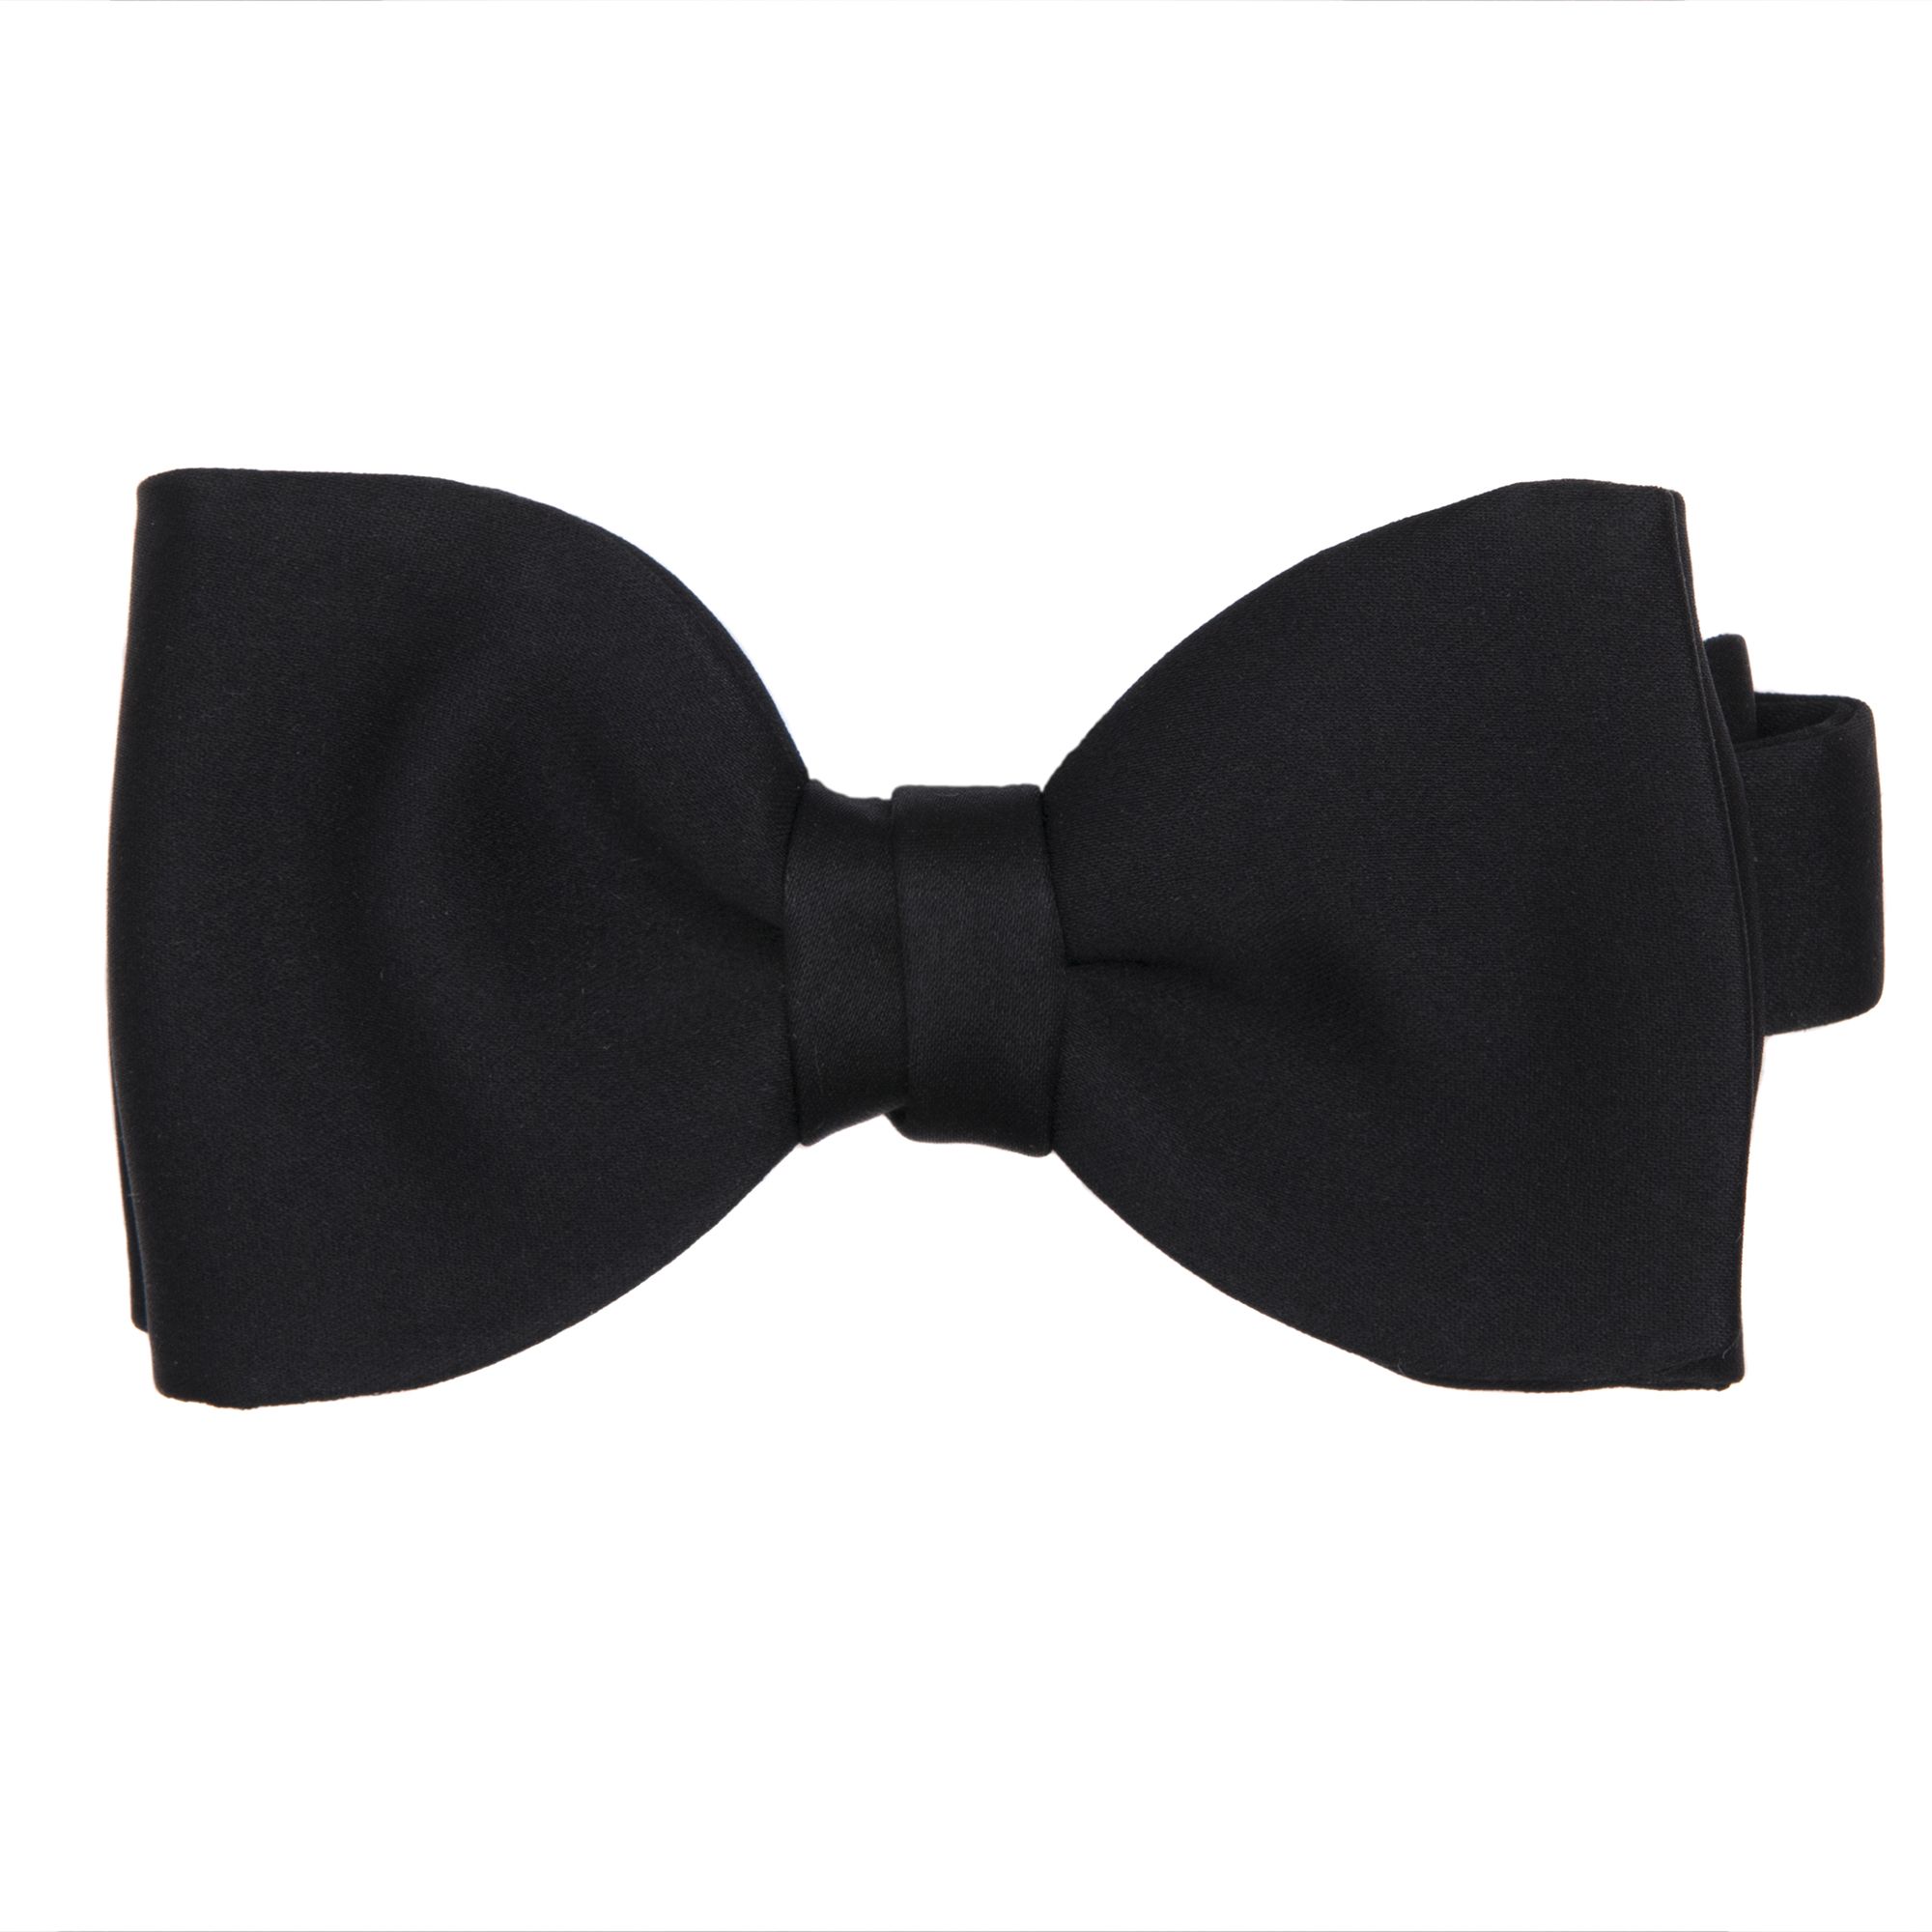 Black satin ready-tied bow tie - Henry Poole Savile Row